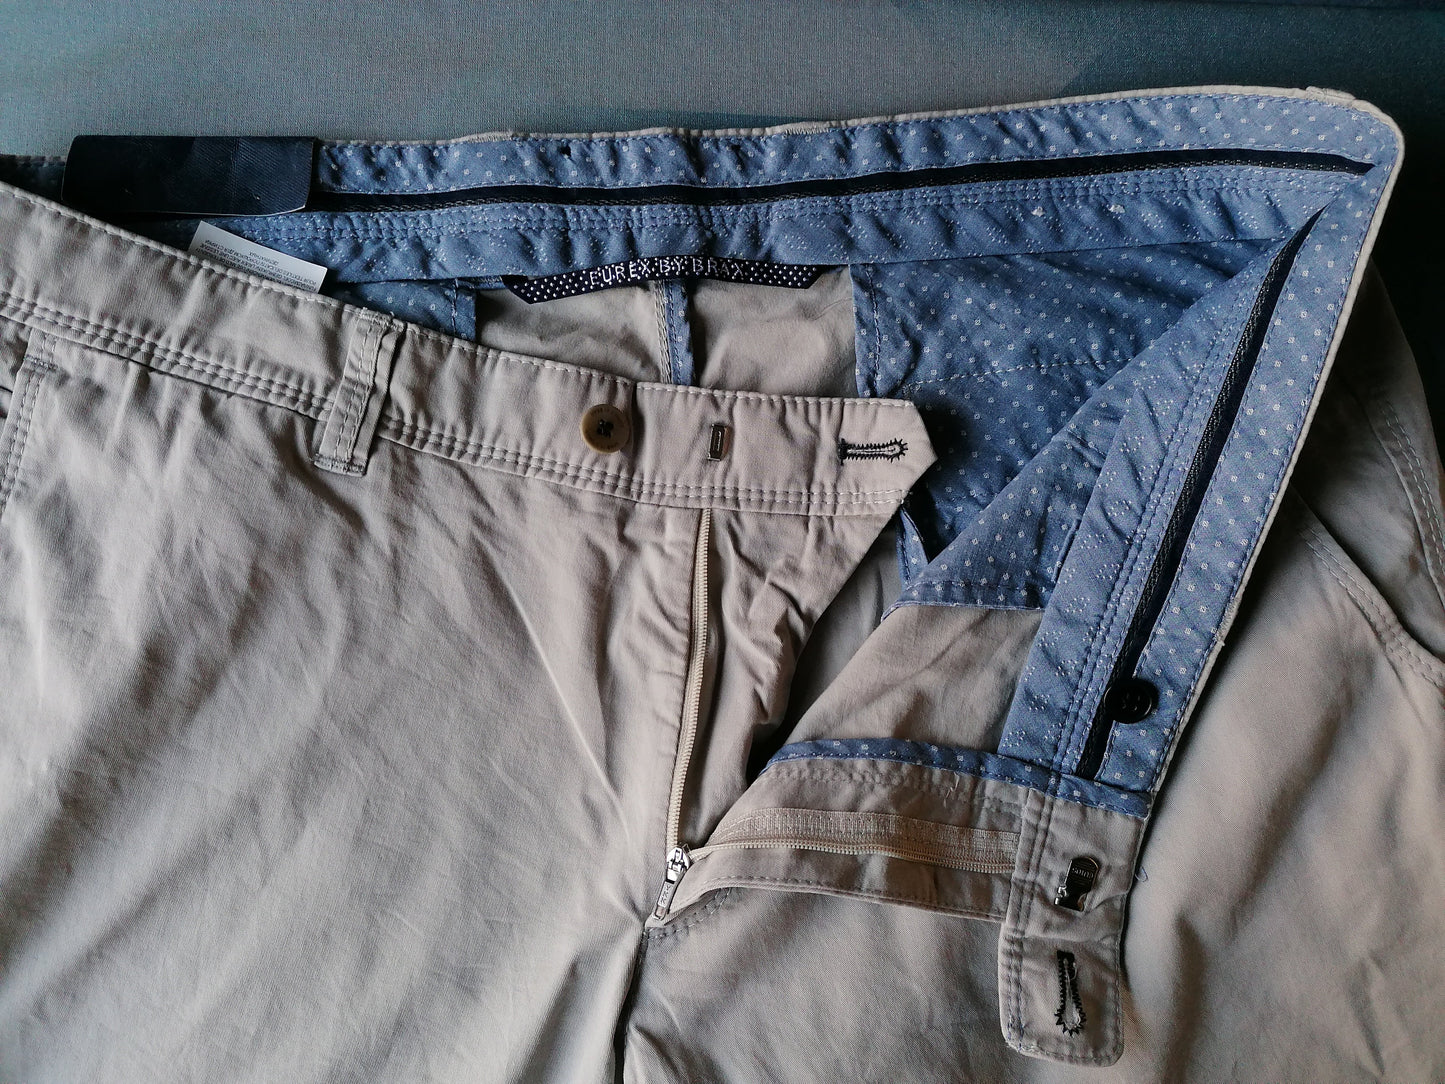 EUREX / Brax pants / trousers. Beige colored. Size 27. "PIMA GABARDINE" NEW!